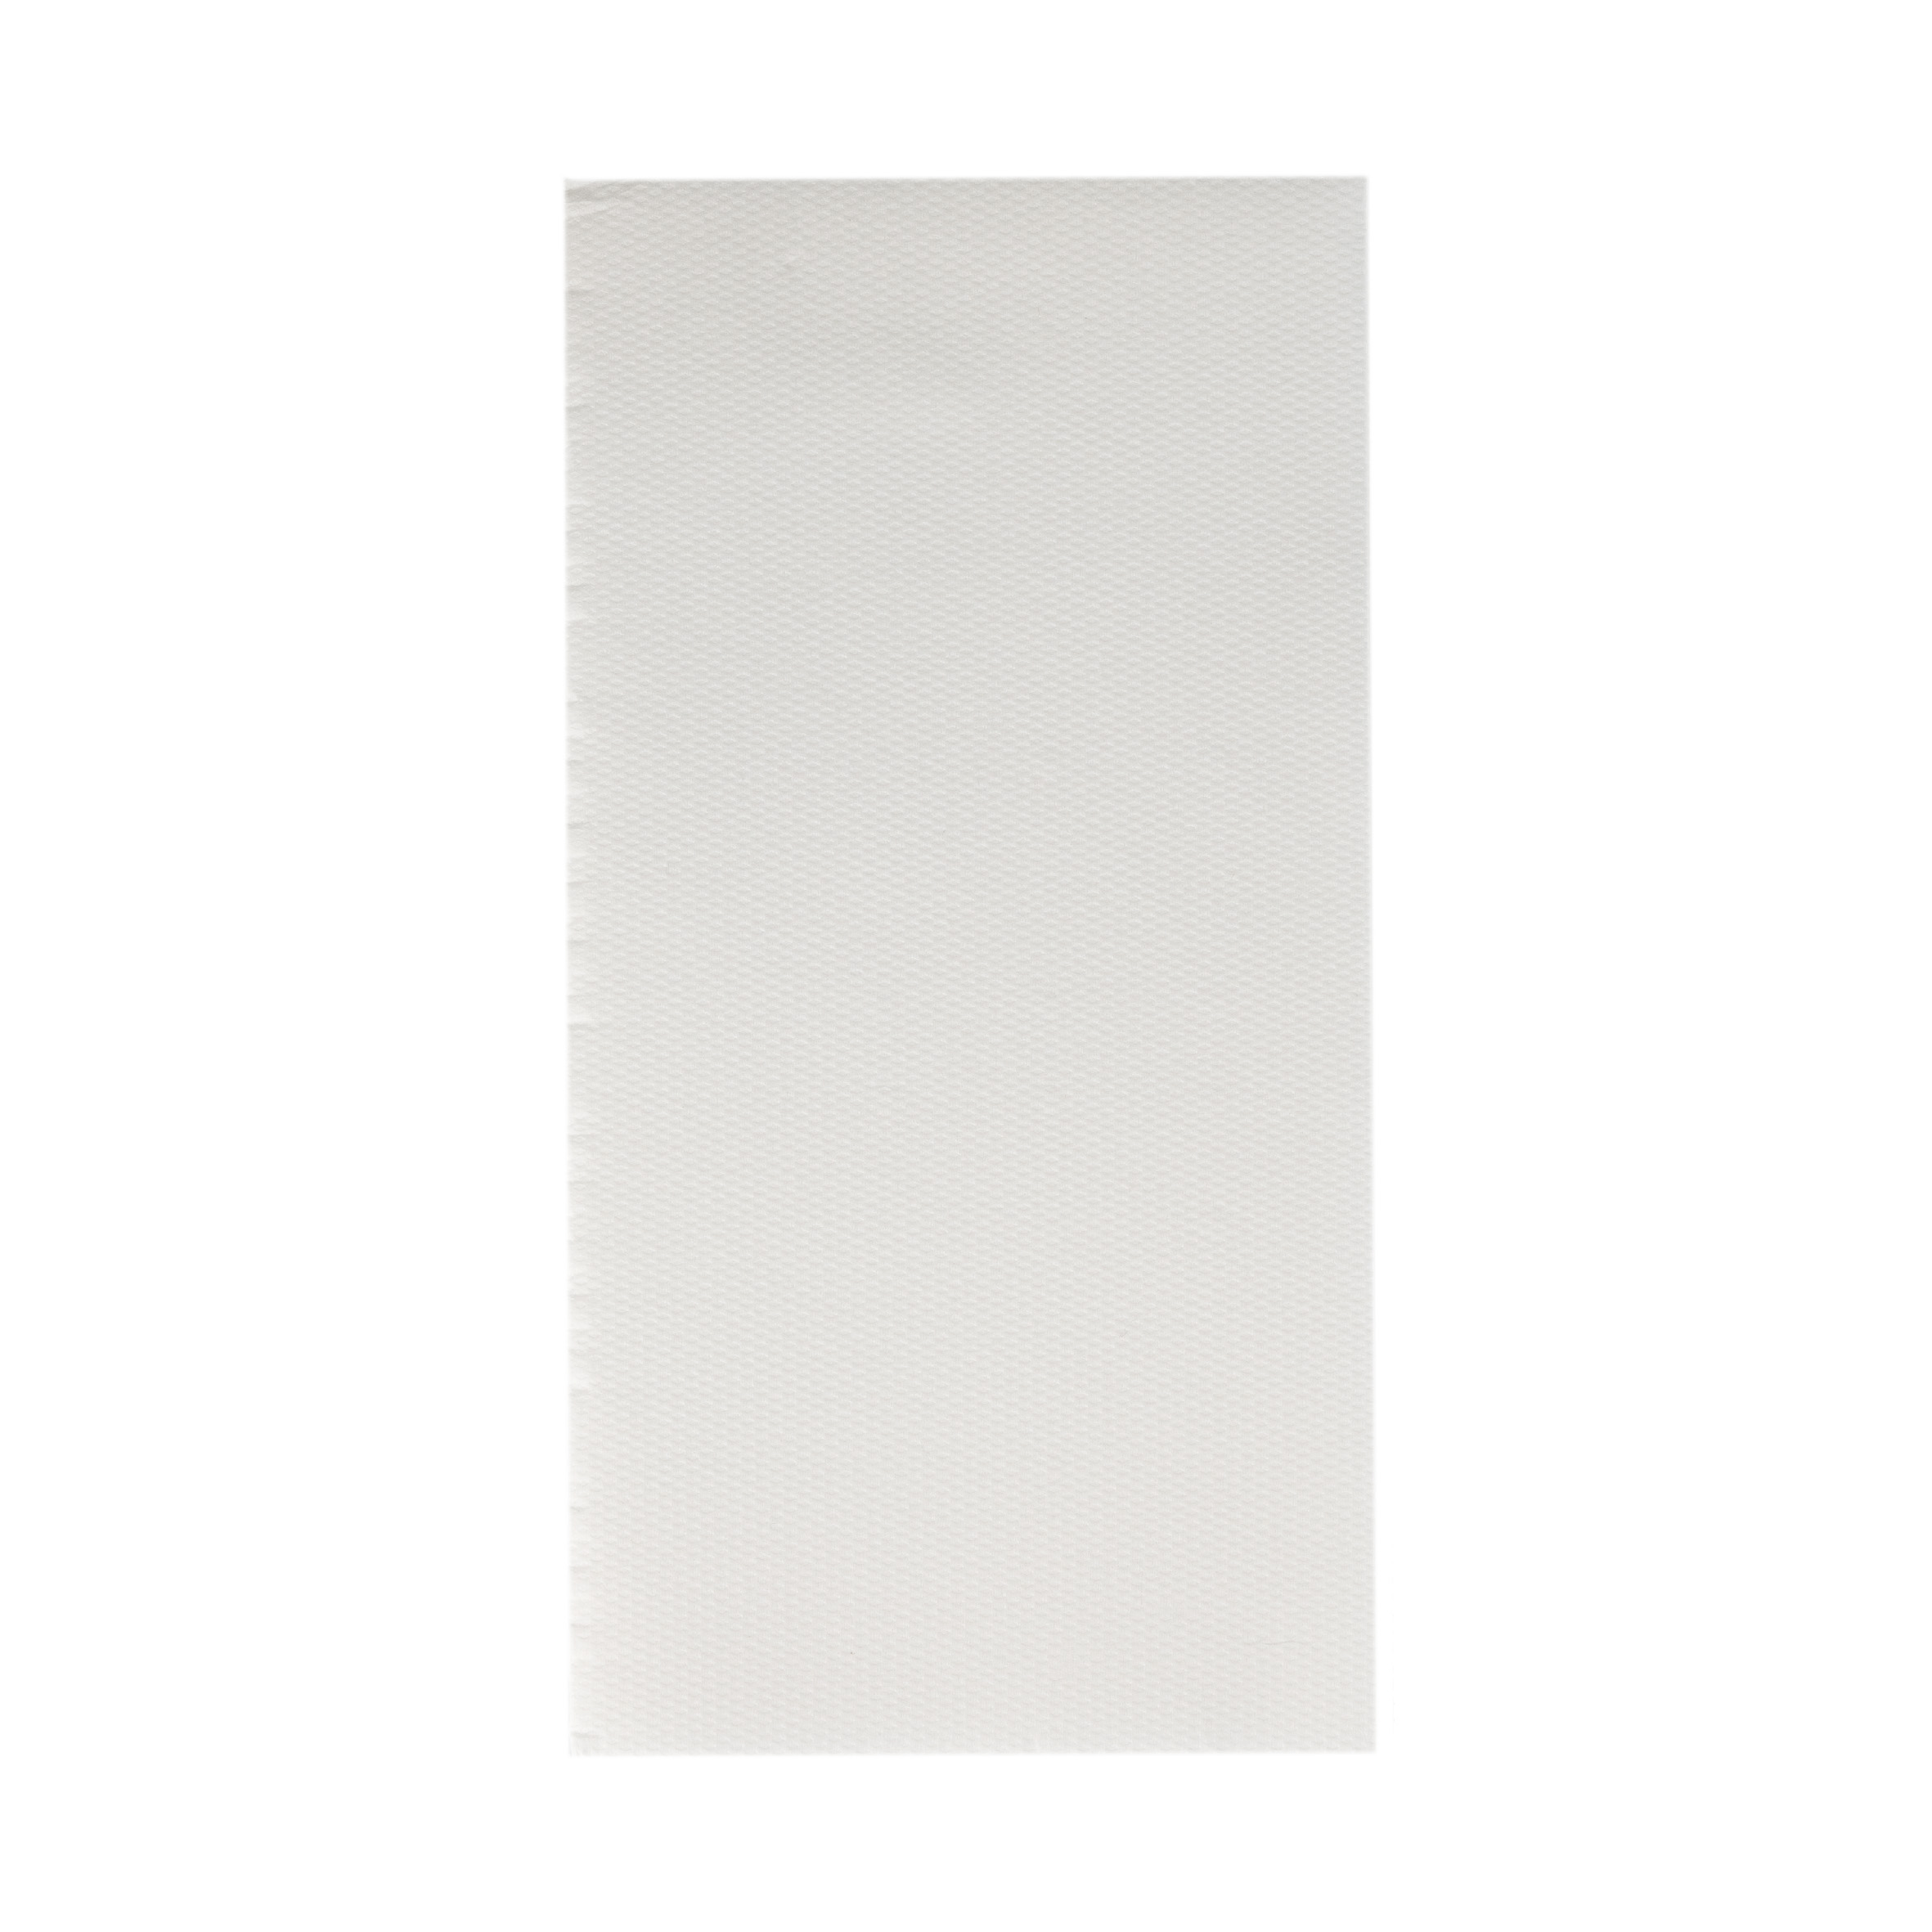 Mank Serviette Softpoint 1/8 Falz, 40 x 40 cm, Basic weiss